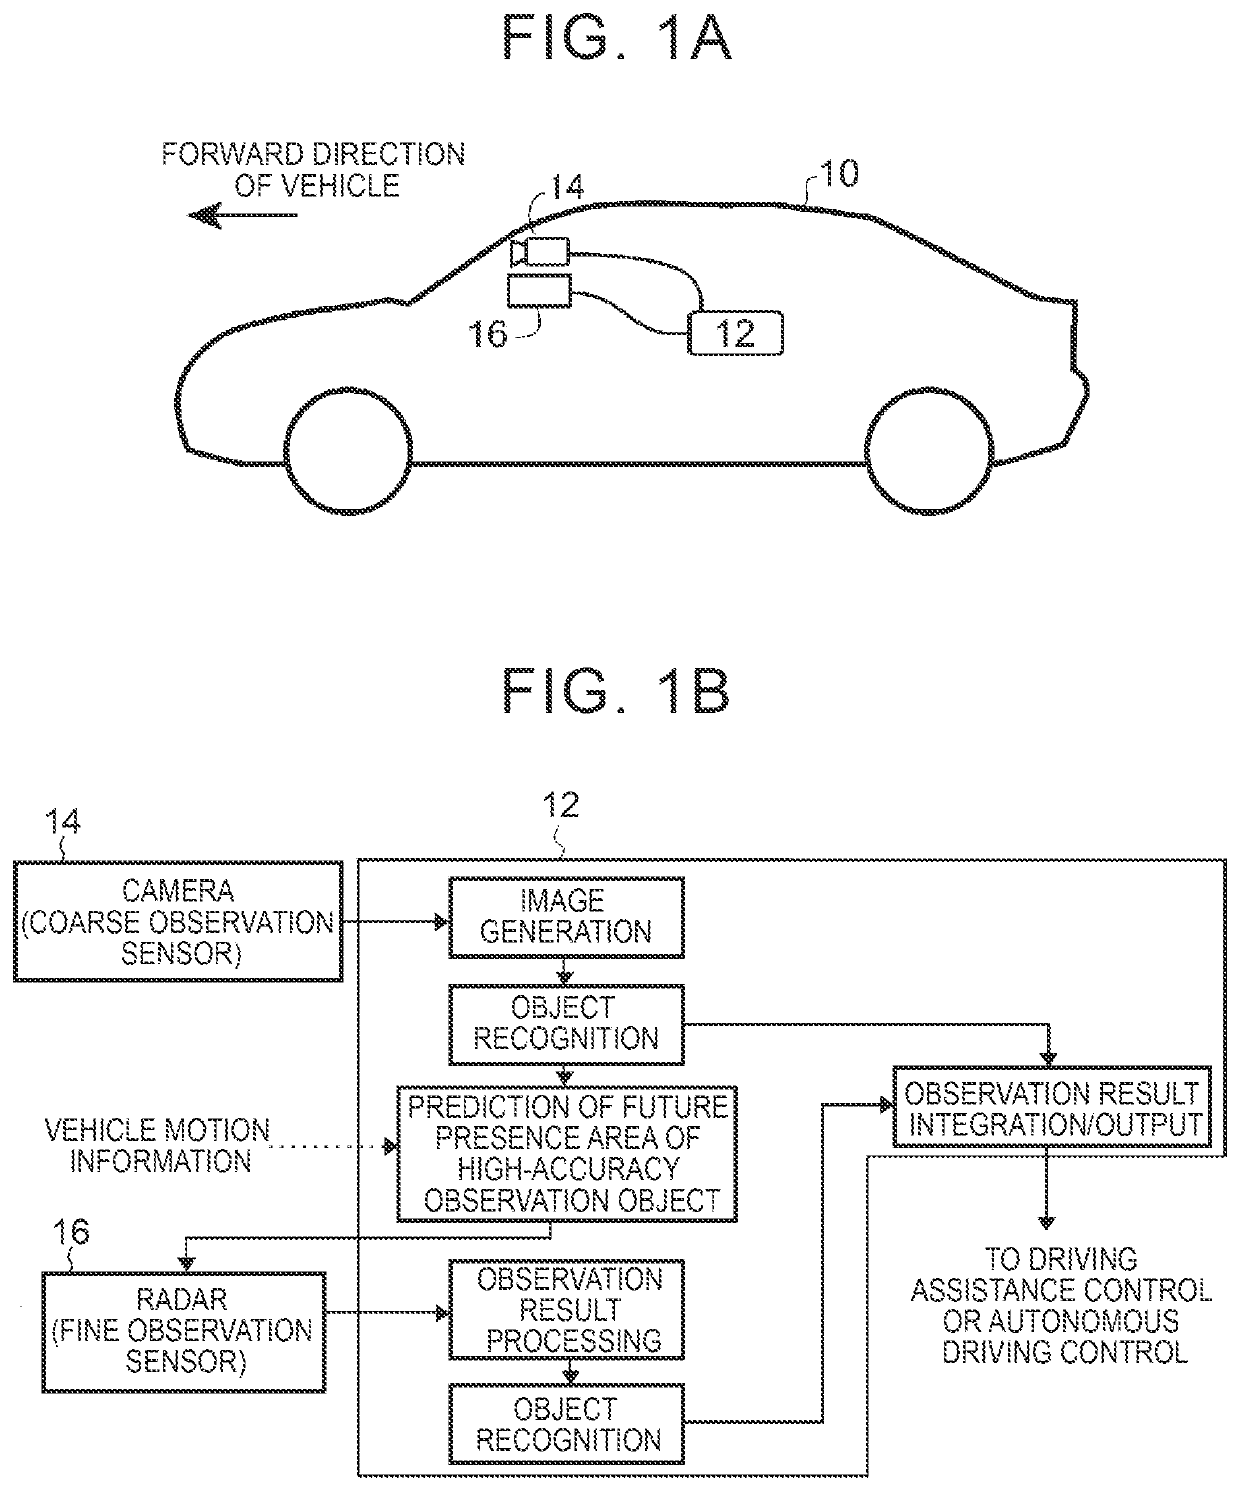 In-vehicle sensor system